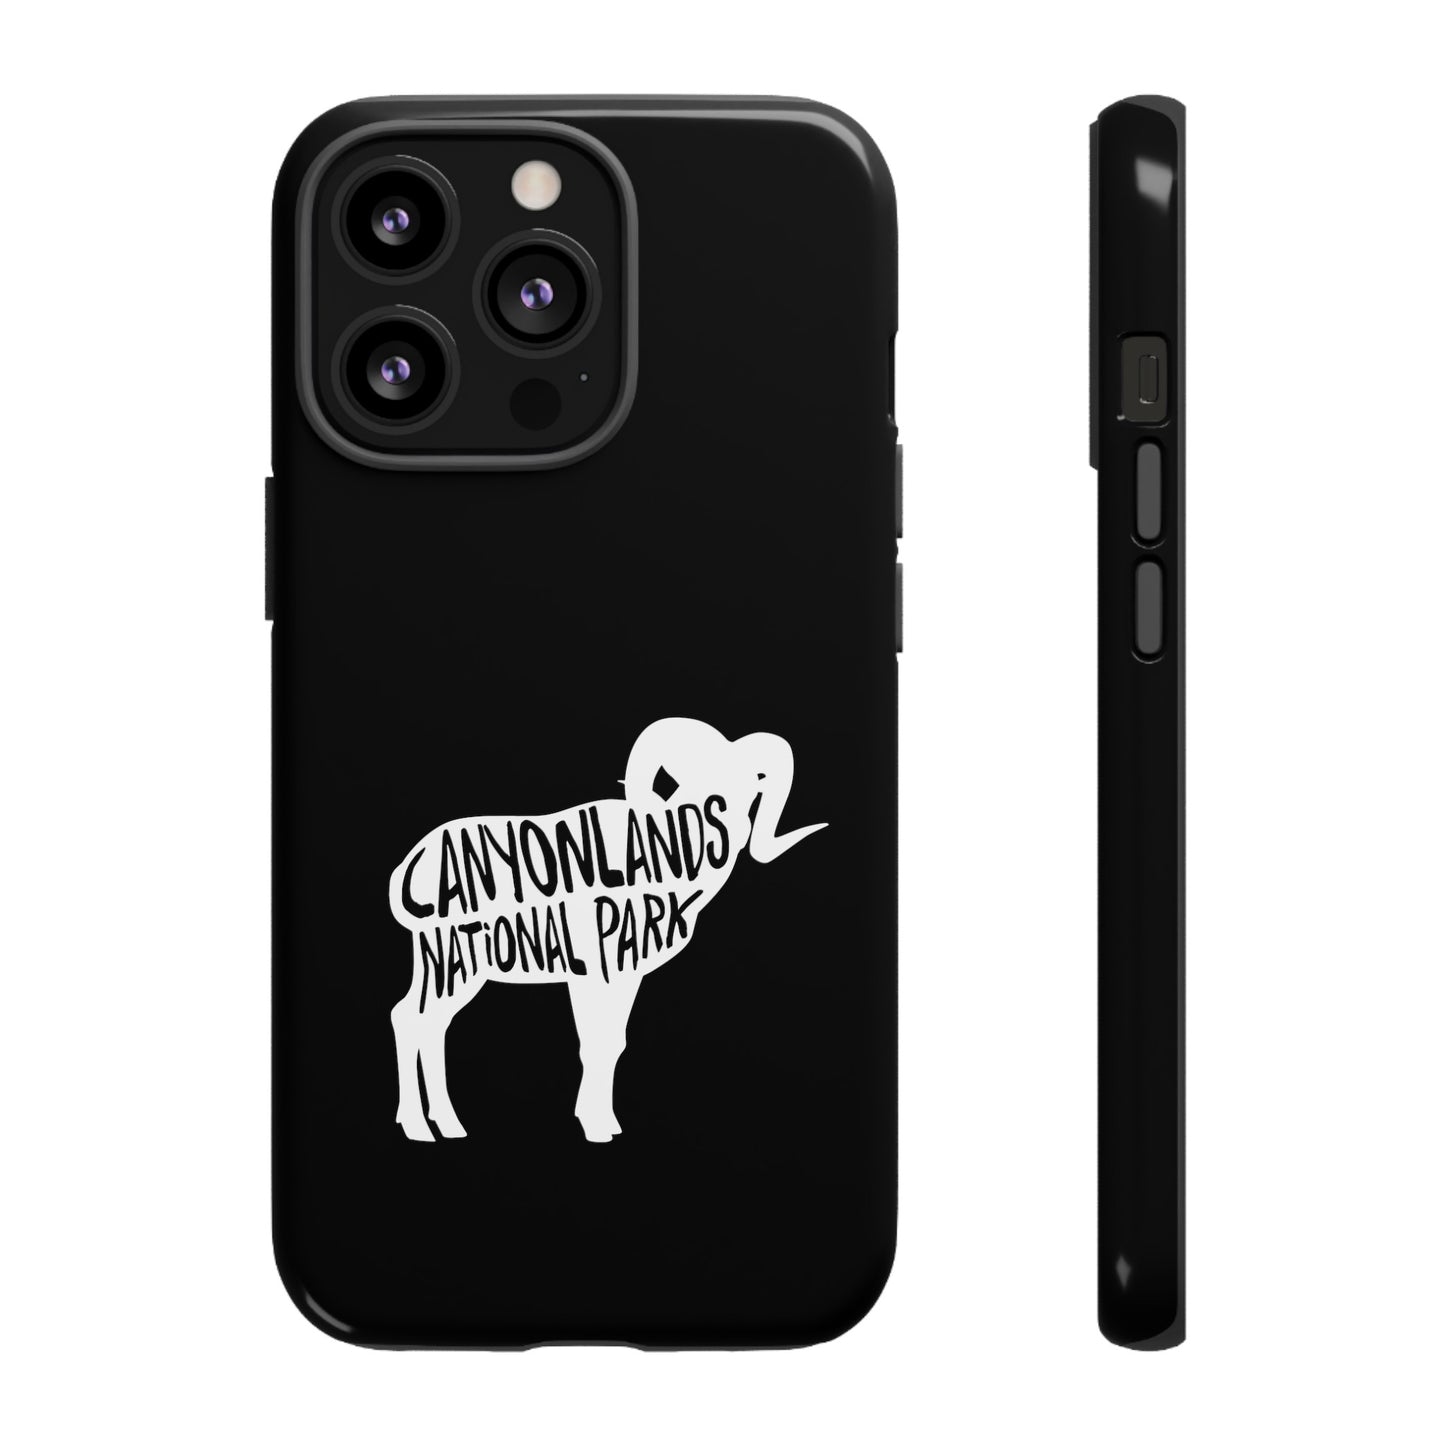 Canyonlands National Park Phone Case - Bighorn Sheep Design